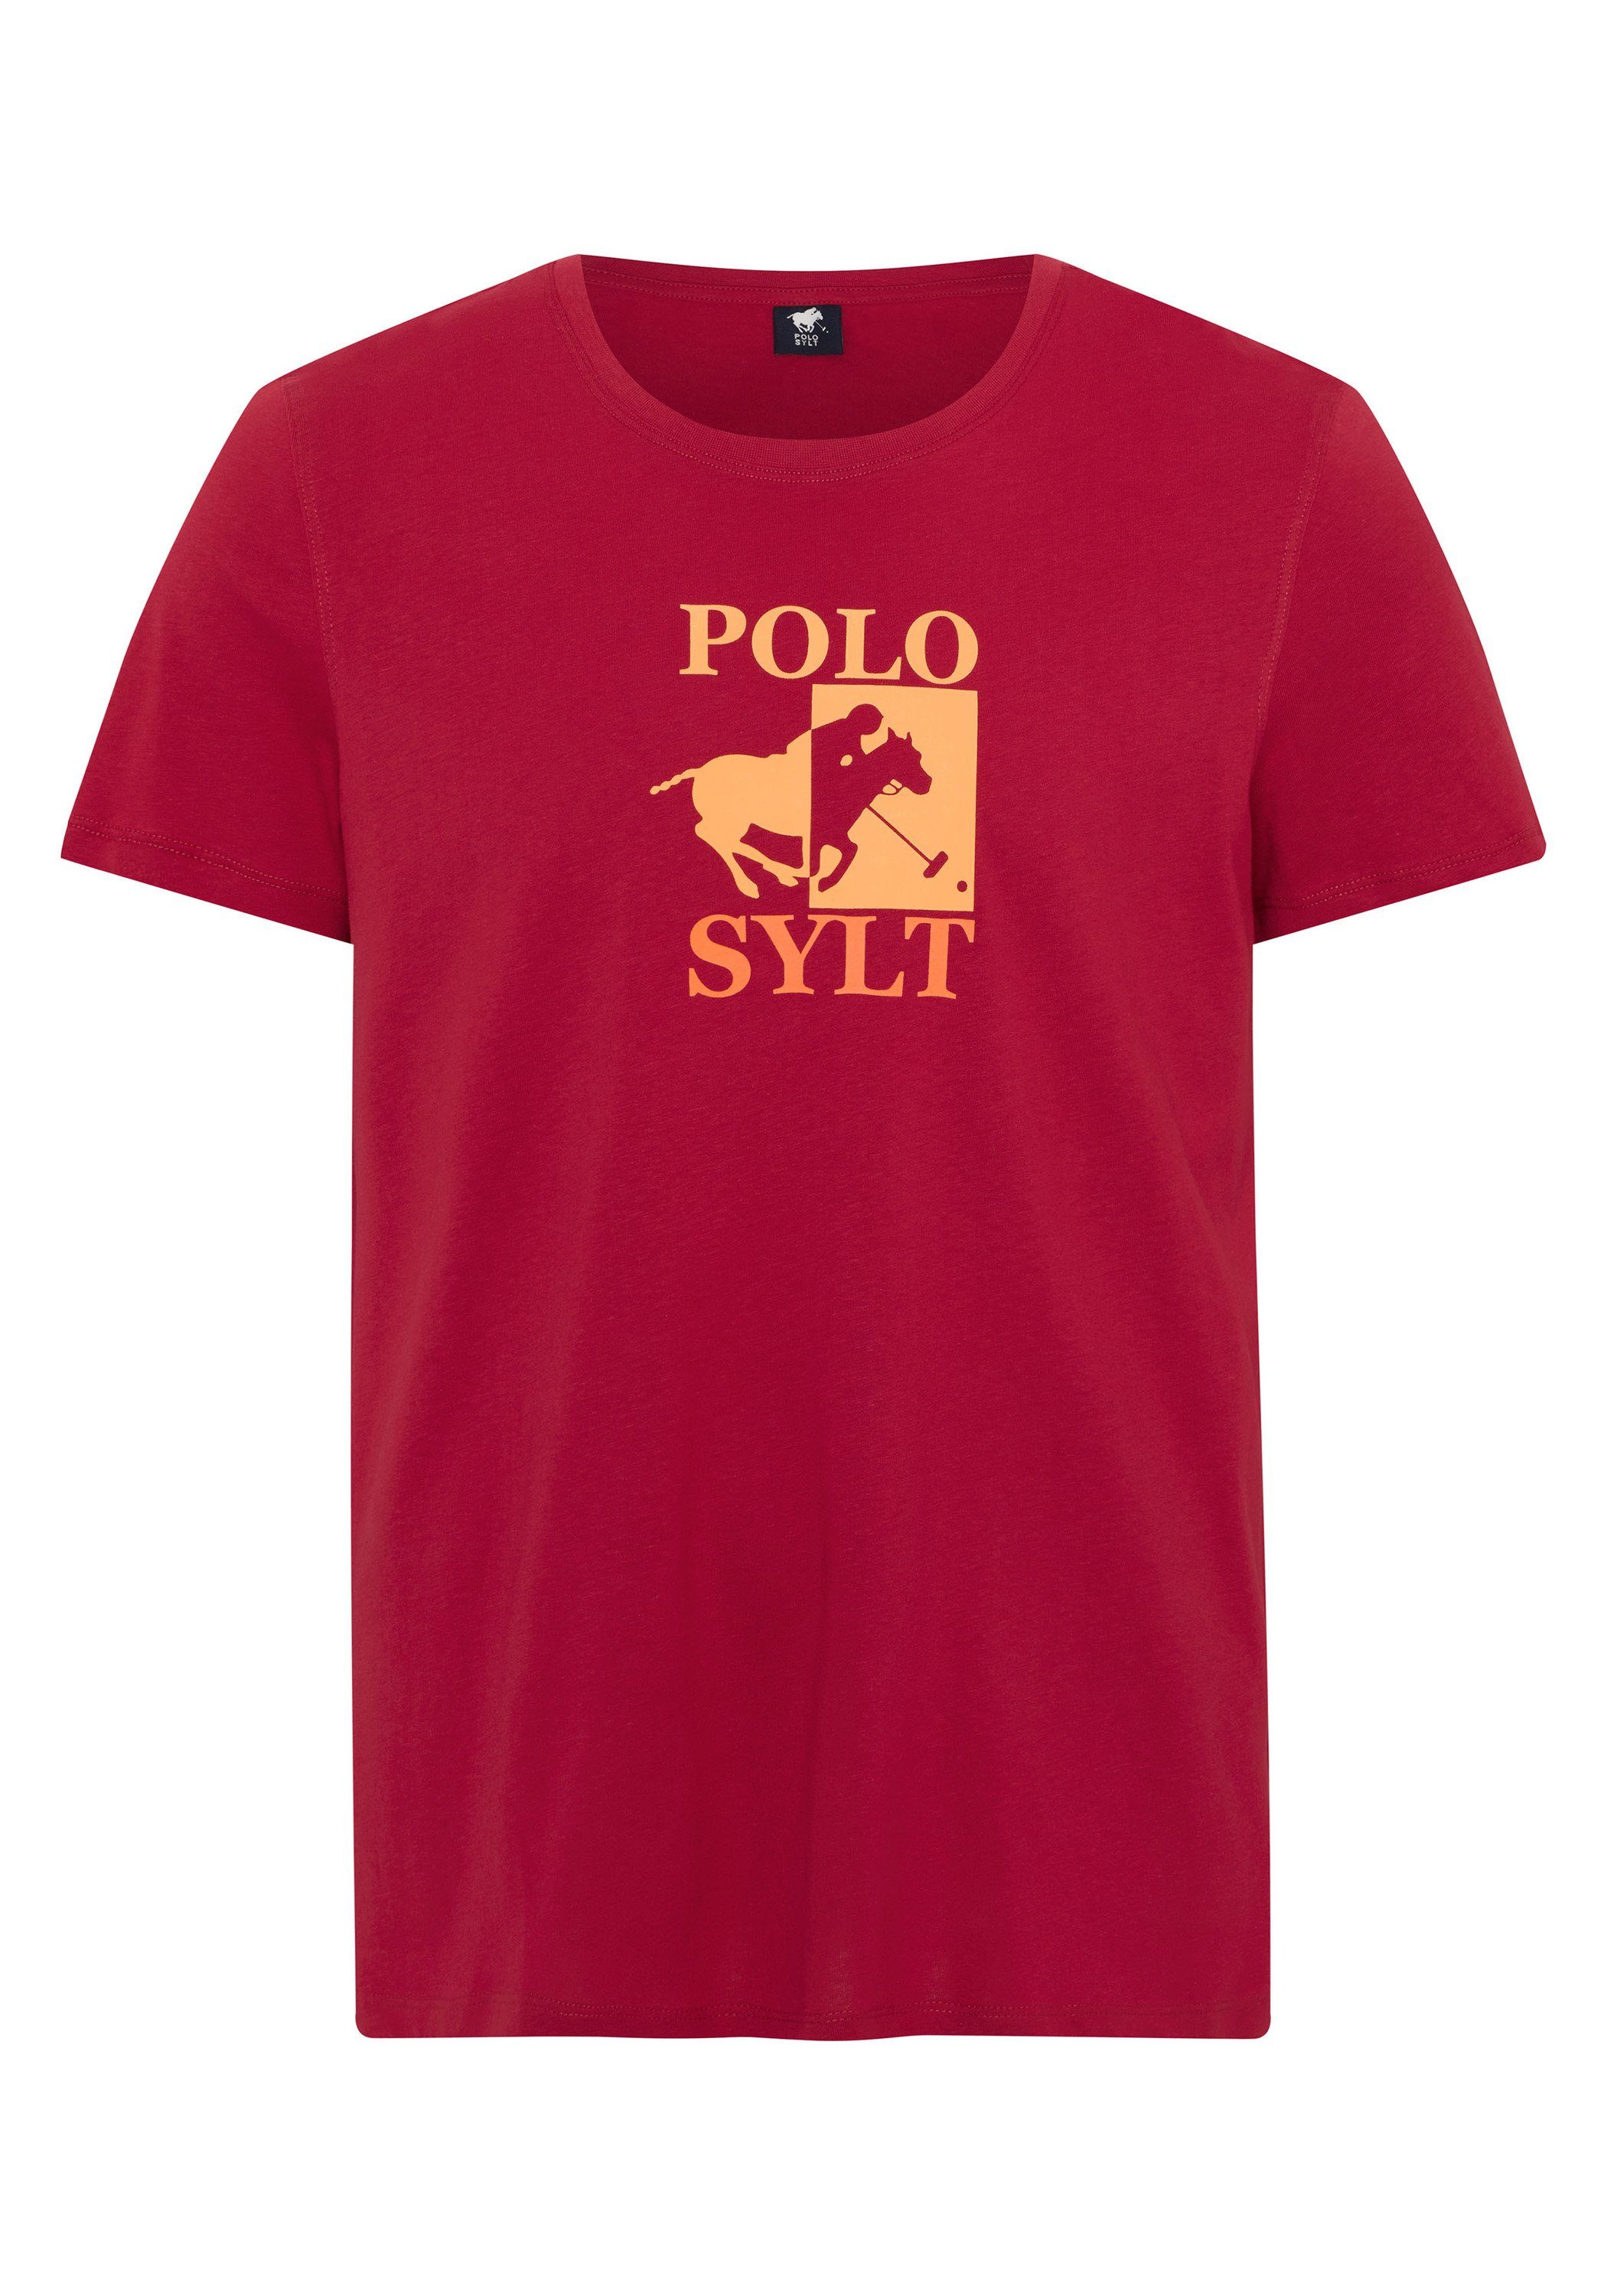 Print-Shirt Pepper großem 19-1557 Logoprint Polo Chili Sylt mit